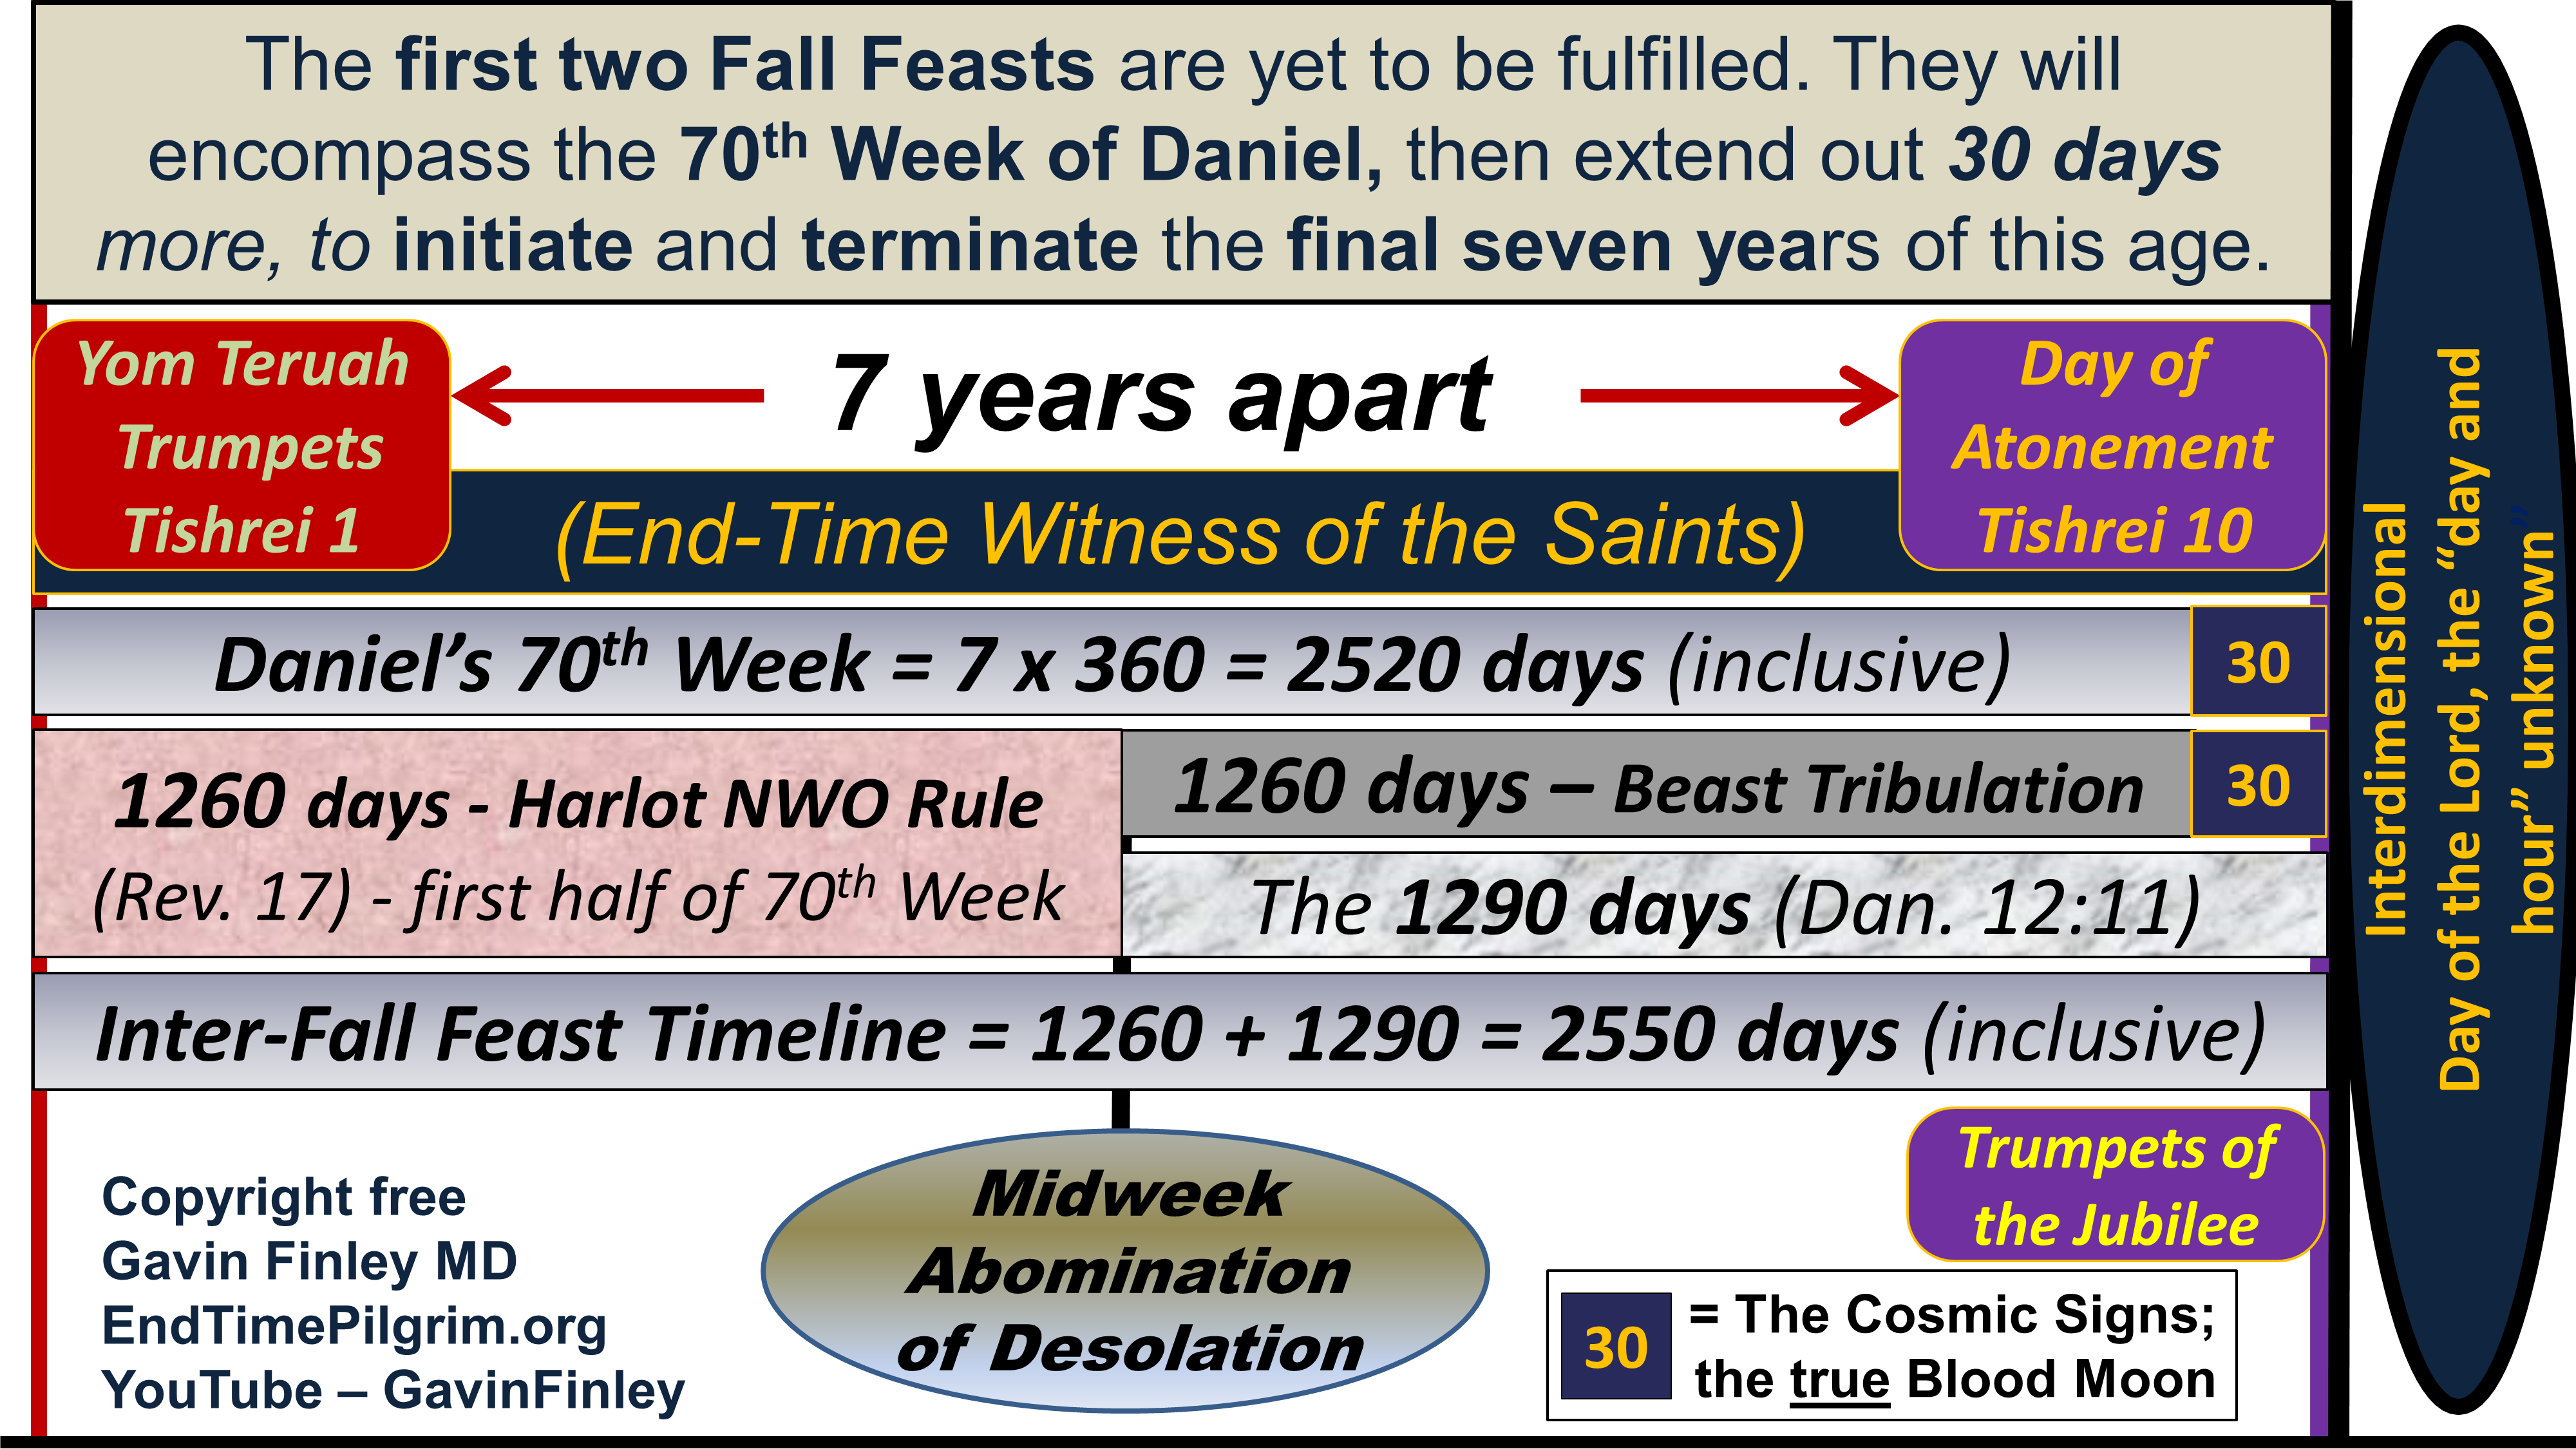 Leviticus 23 Feasts Chart